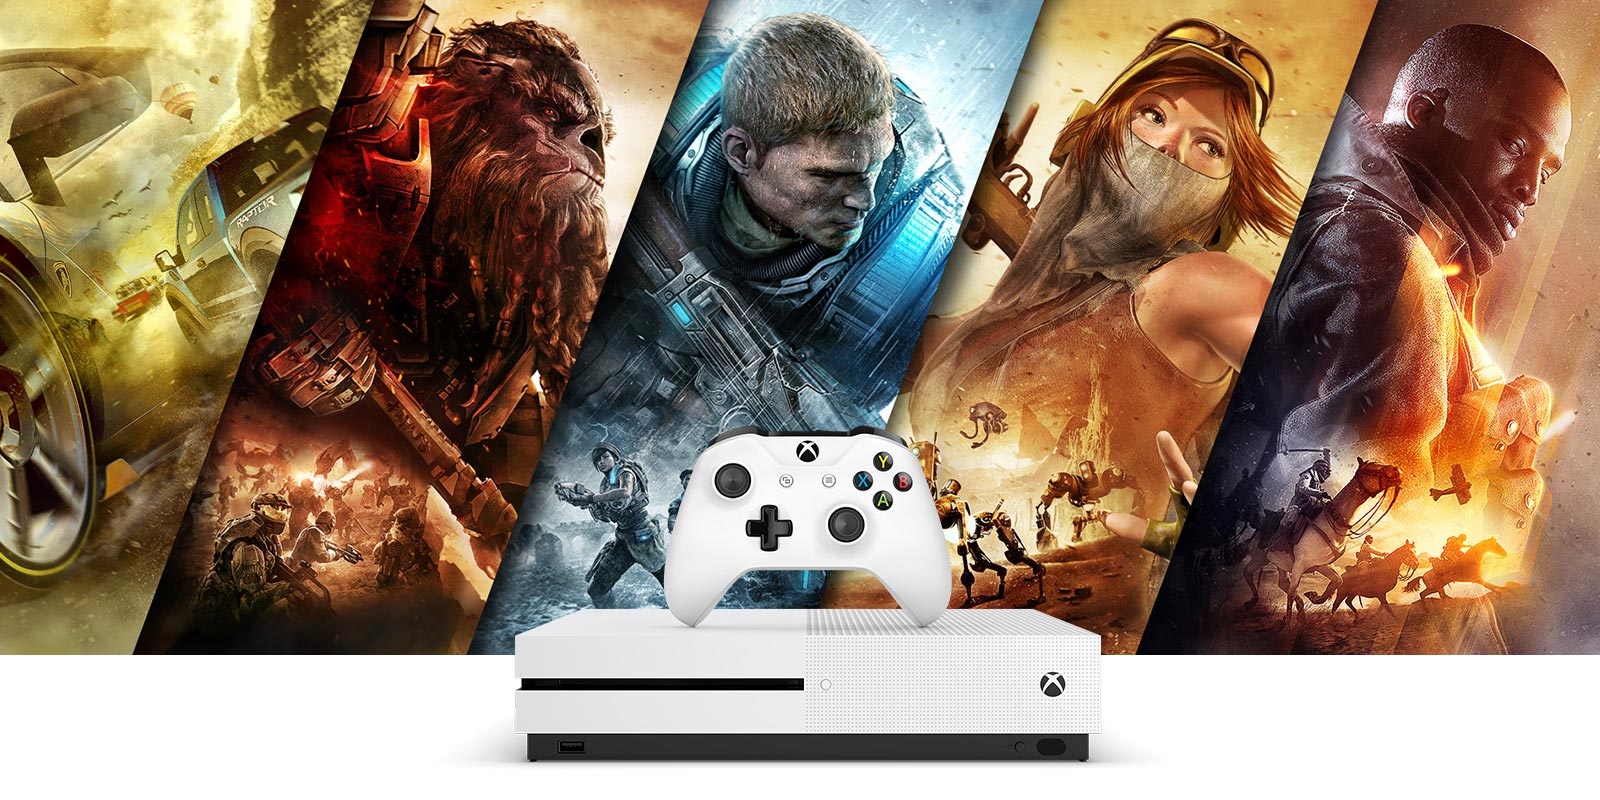 klei investering Zakje Xbox One S (& HDR gaming) review - FlatpanelsHD